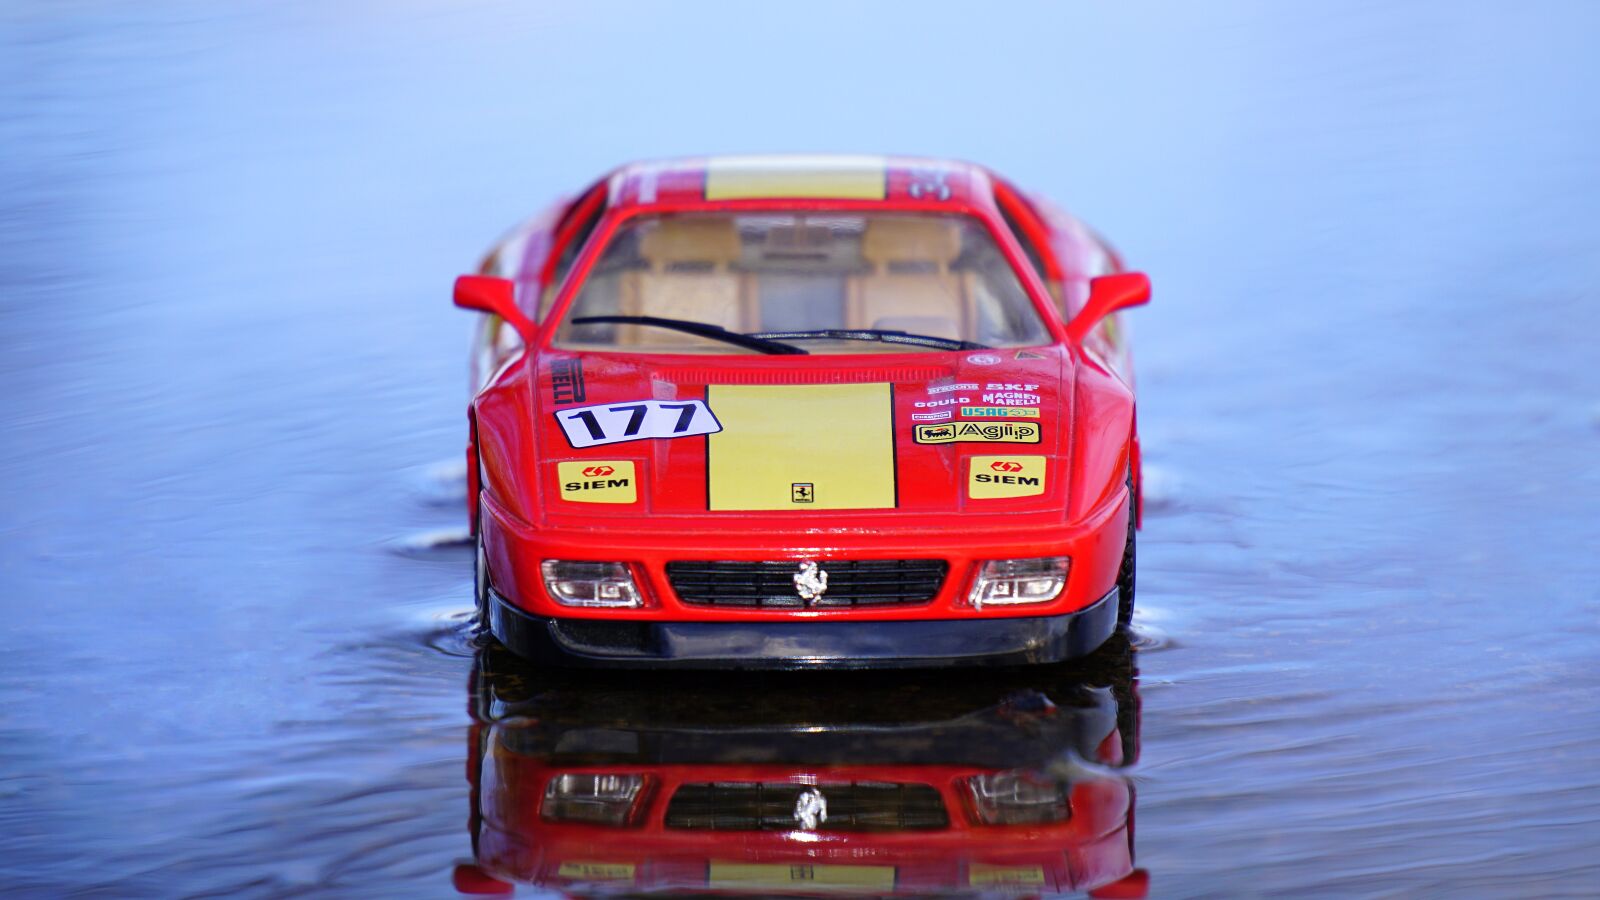 Sony a6000 sample photo. Ferrari, miniature, model car photography